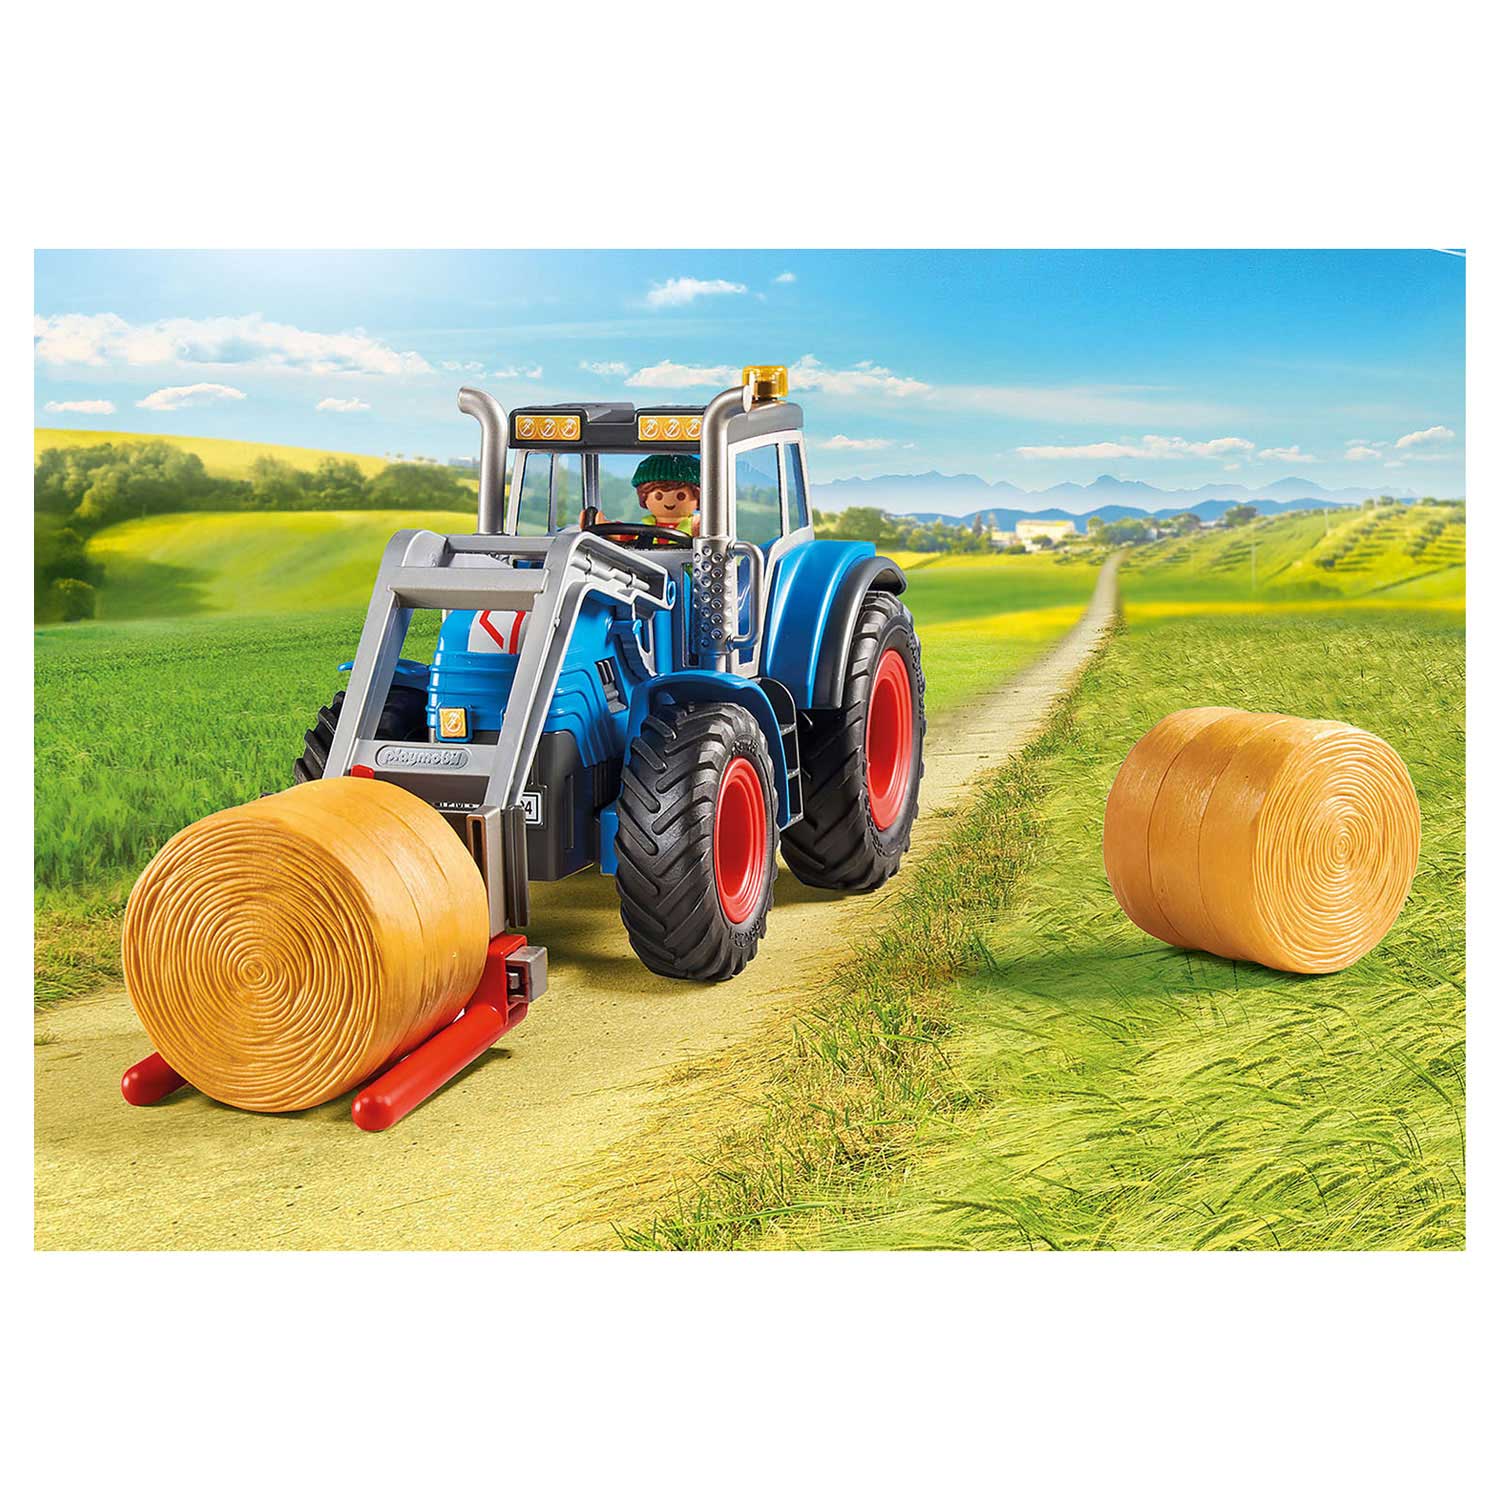 Playmobil Country Großer Traktor mit Zubehör - 71004